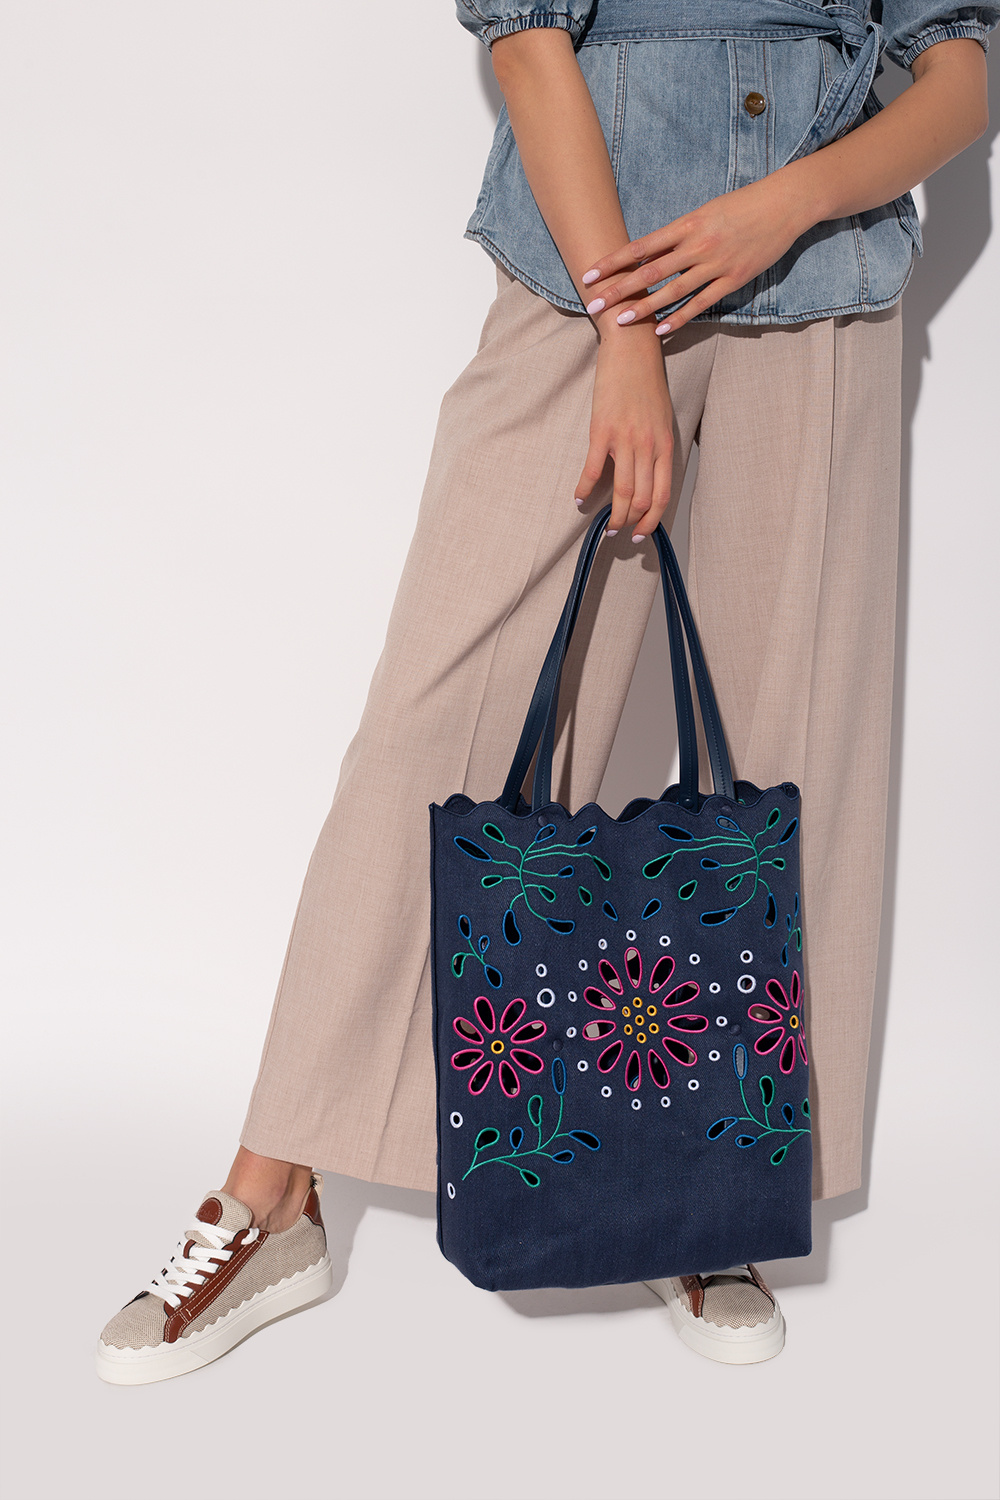 Chloé ‘Kamilla’ shopper bag